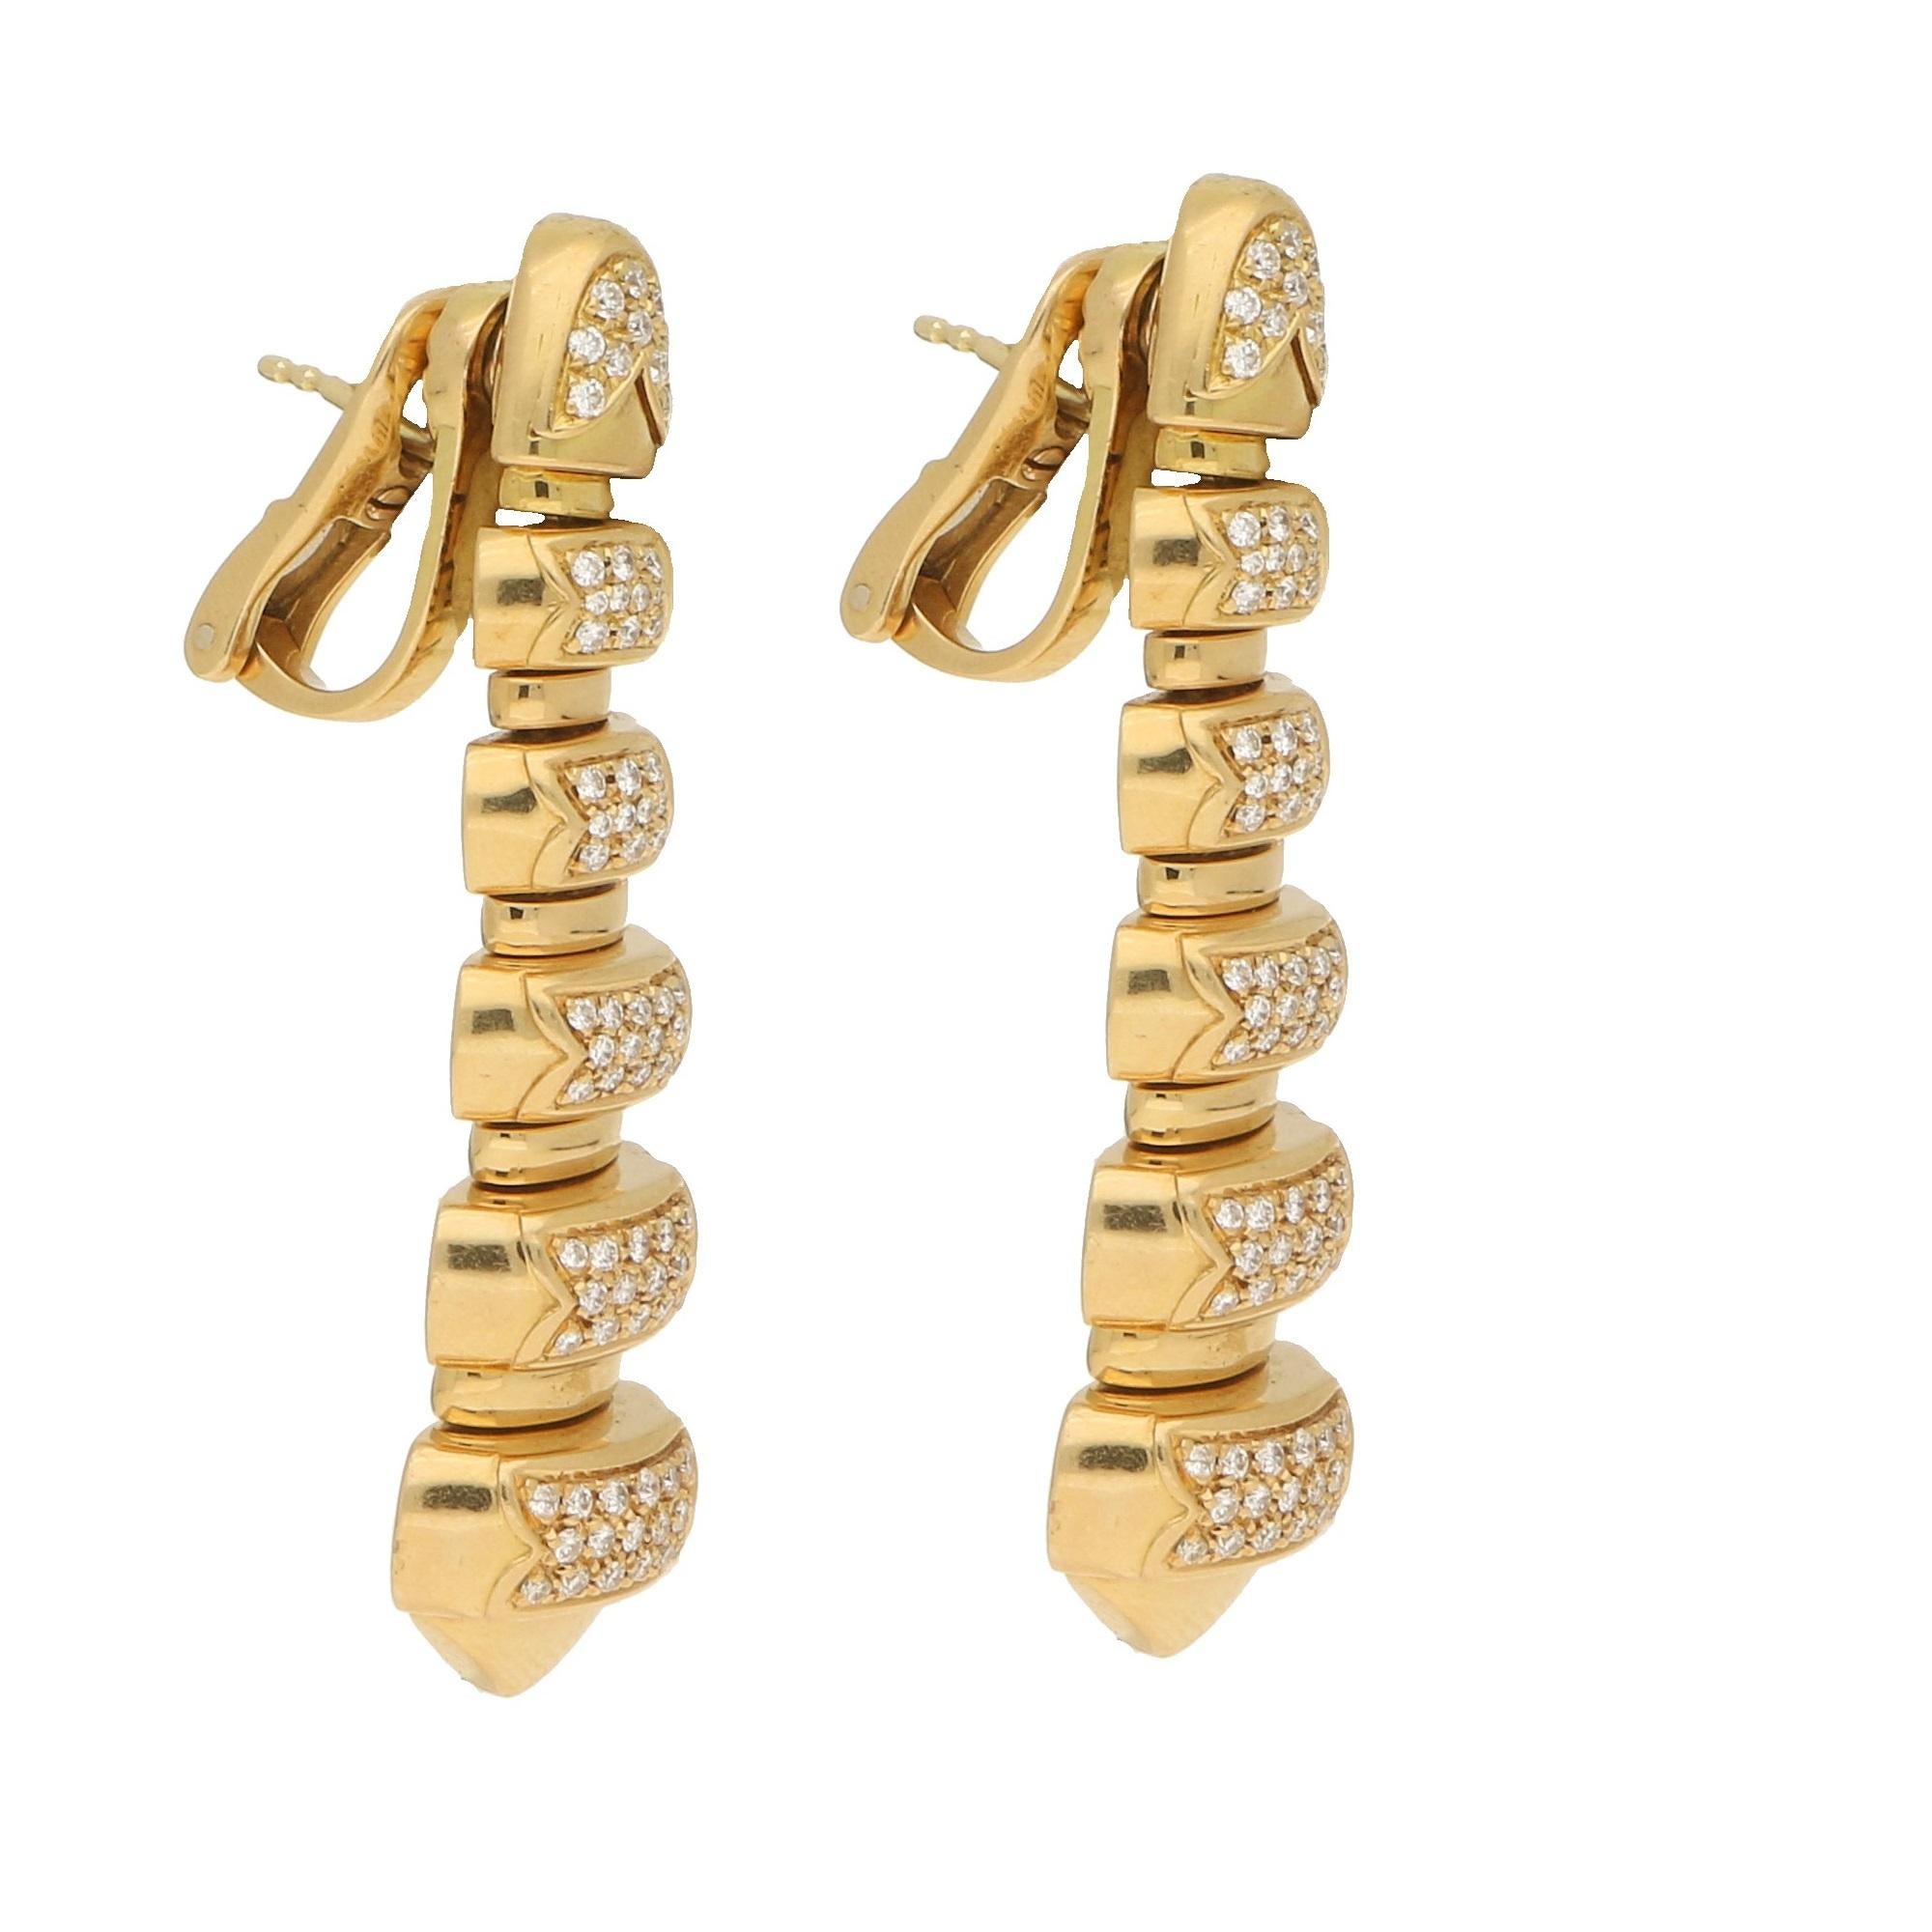 Round Cut Vintage Bulgari Diamond Drop Earrings in Yellow Gold 1.15 Carat